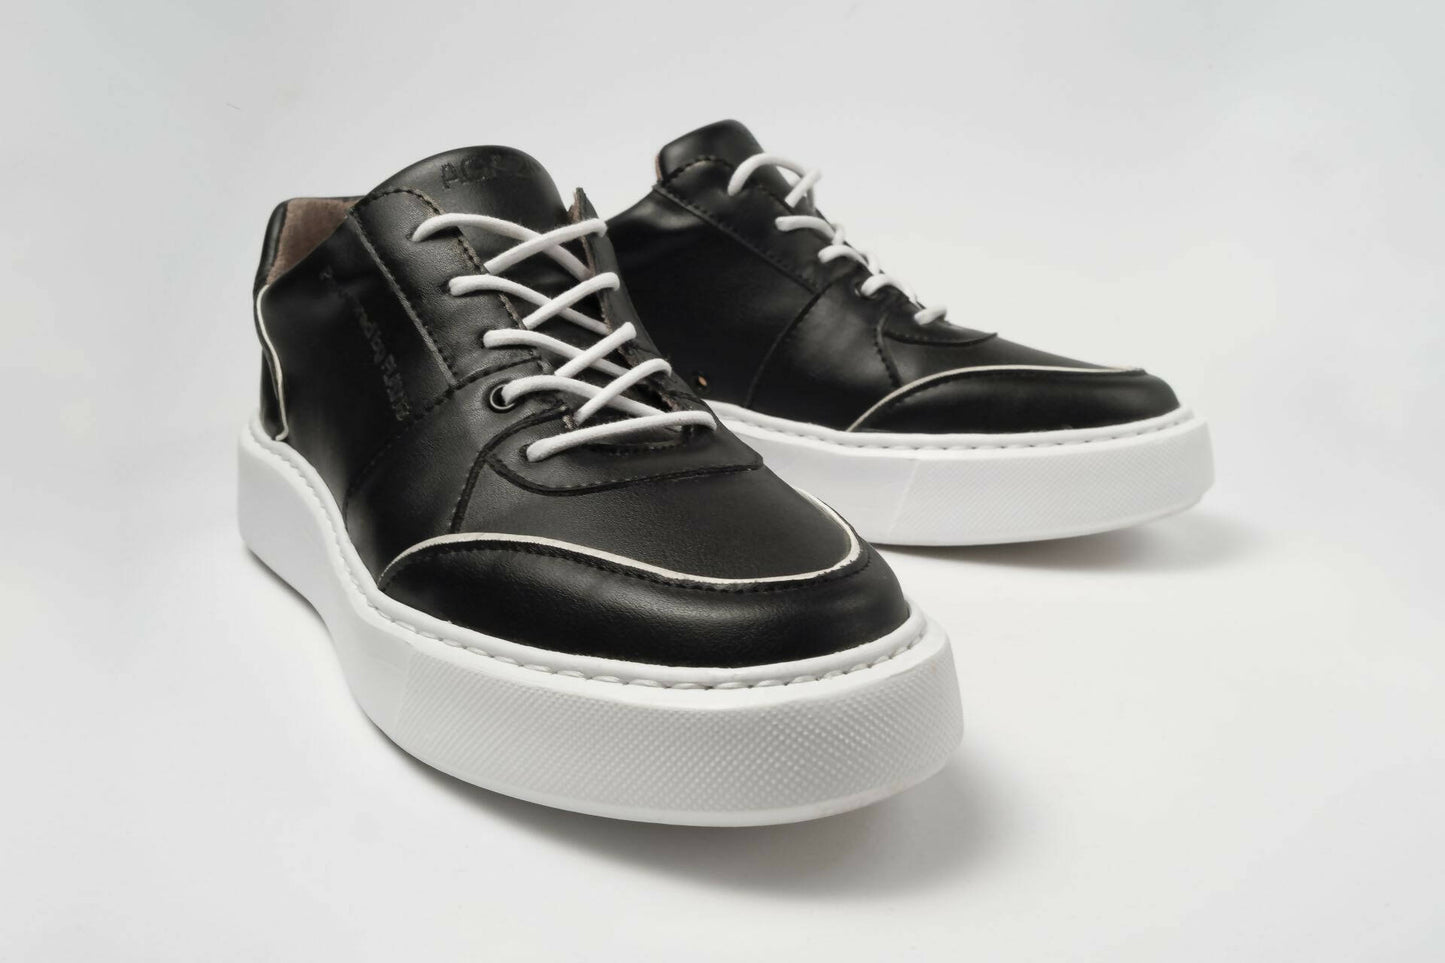 EMI low sneakers black & white